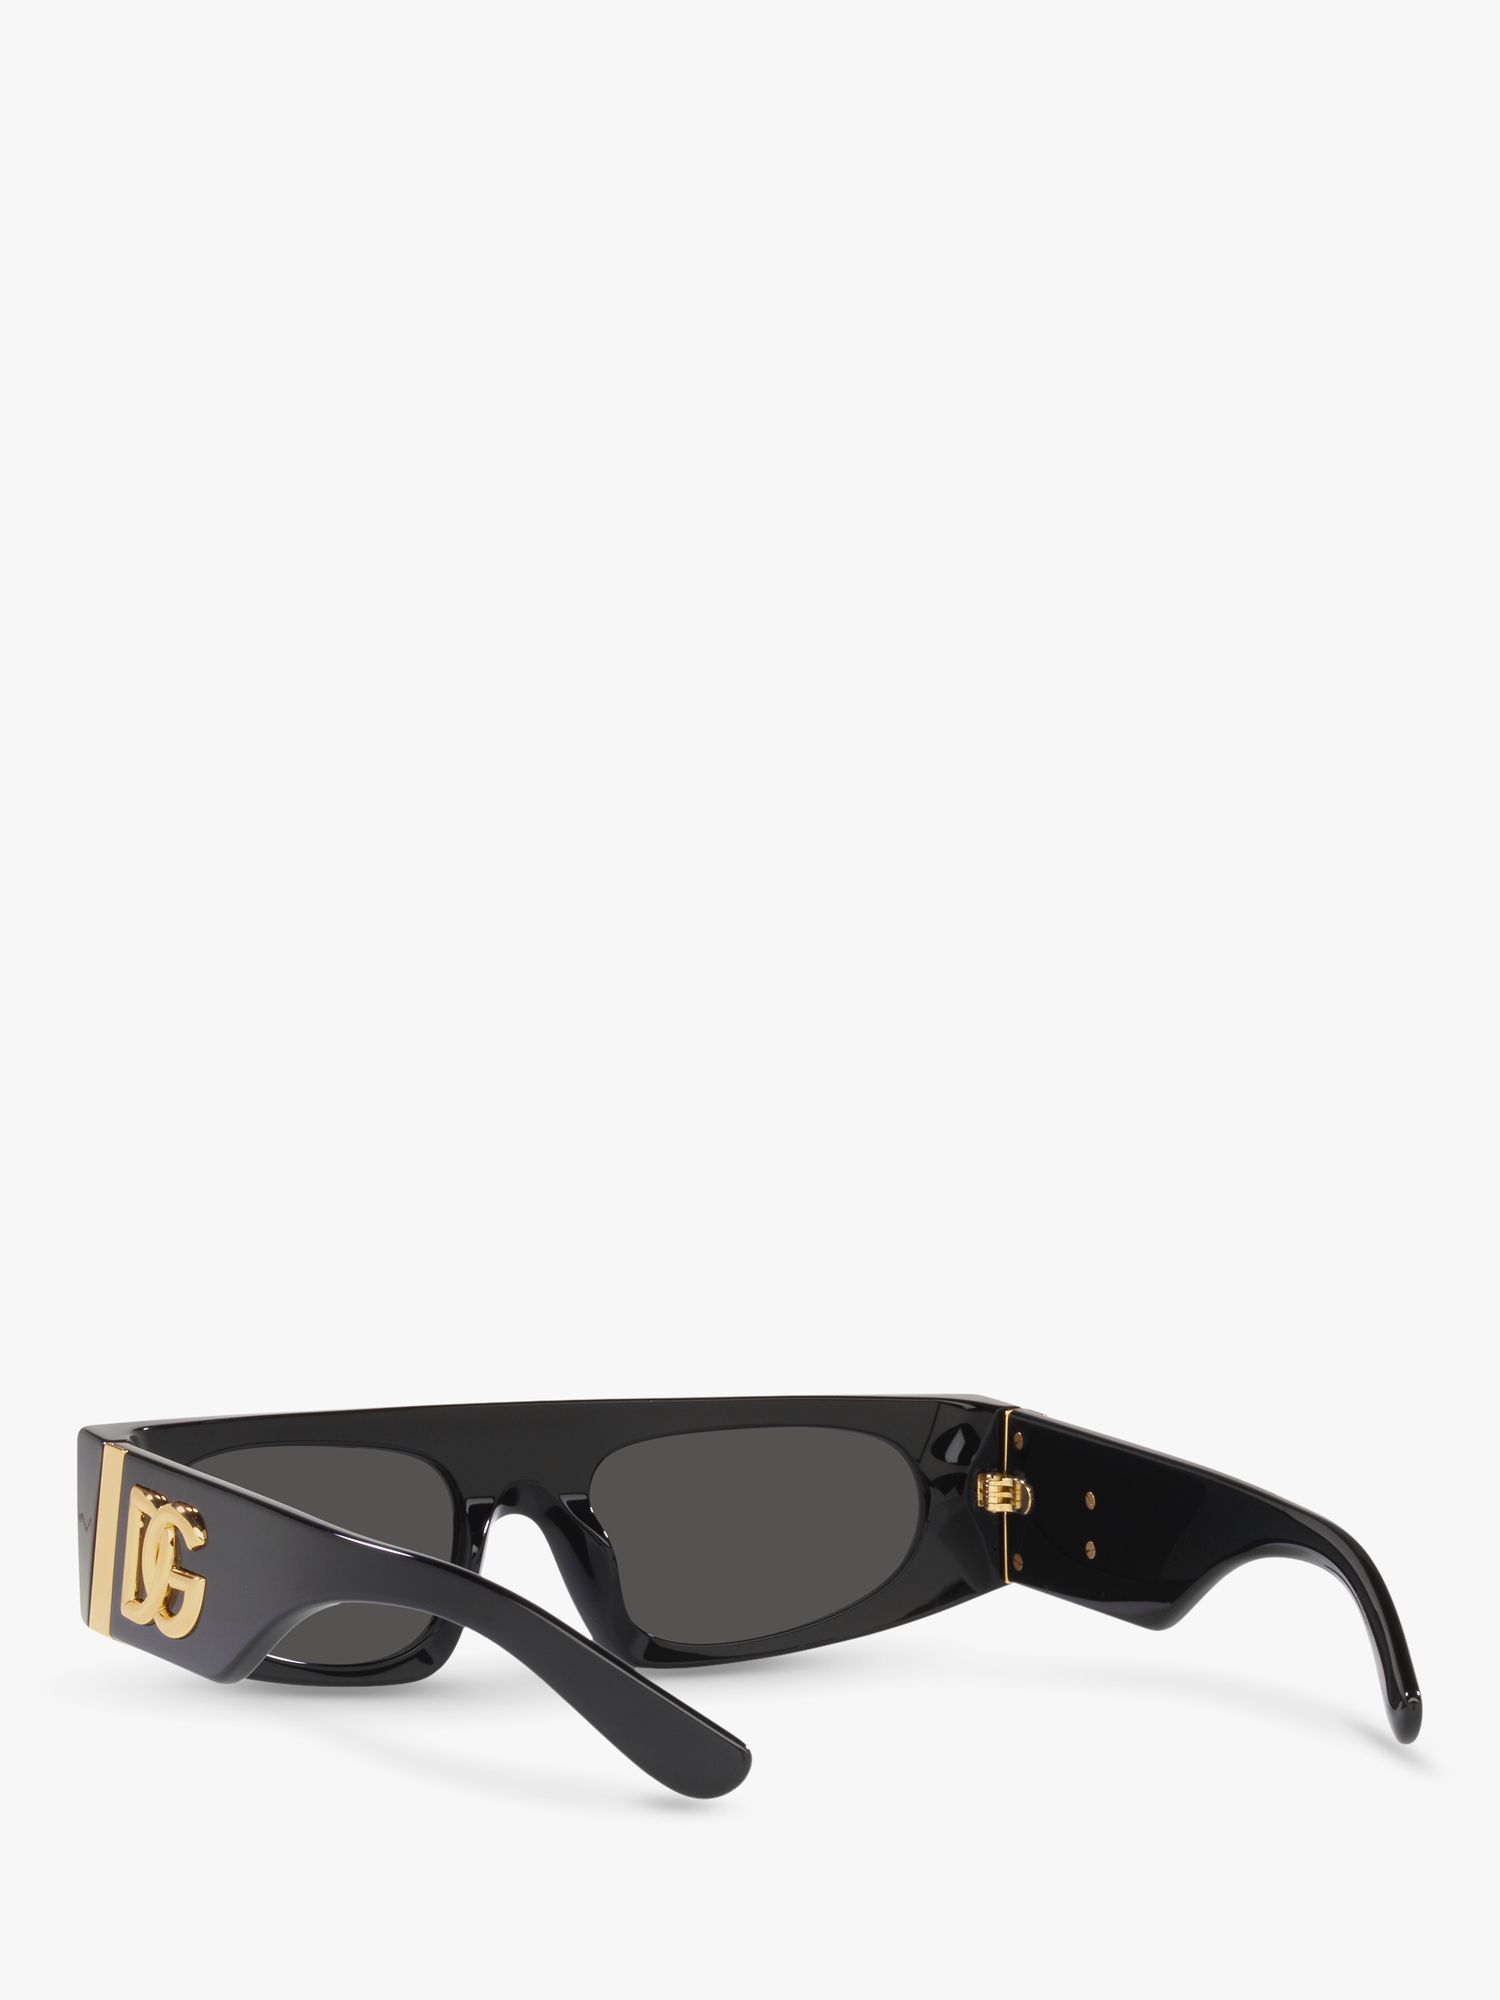 Dolce & Gabbana DG4411 Women's Rectangular Sunglasses, Black/Grey